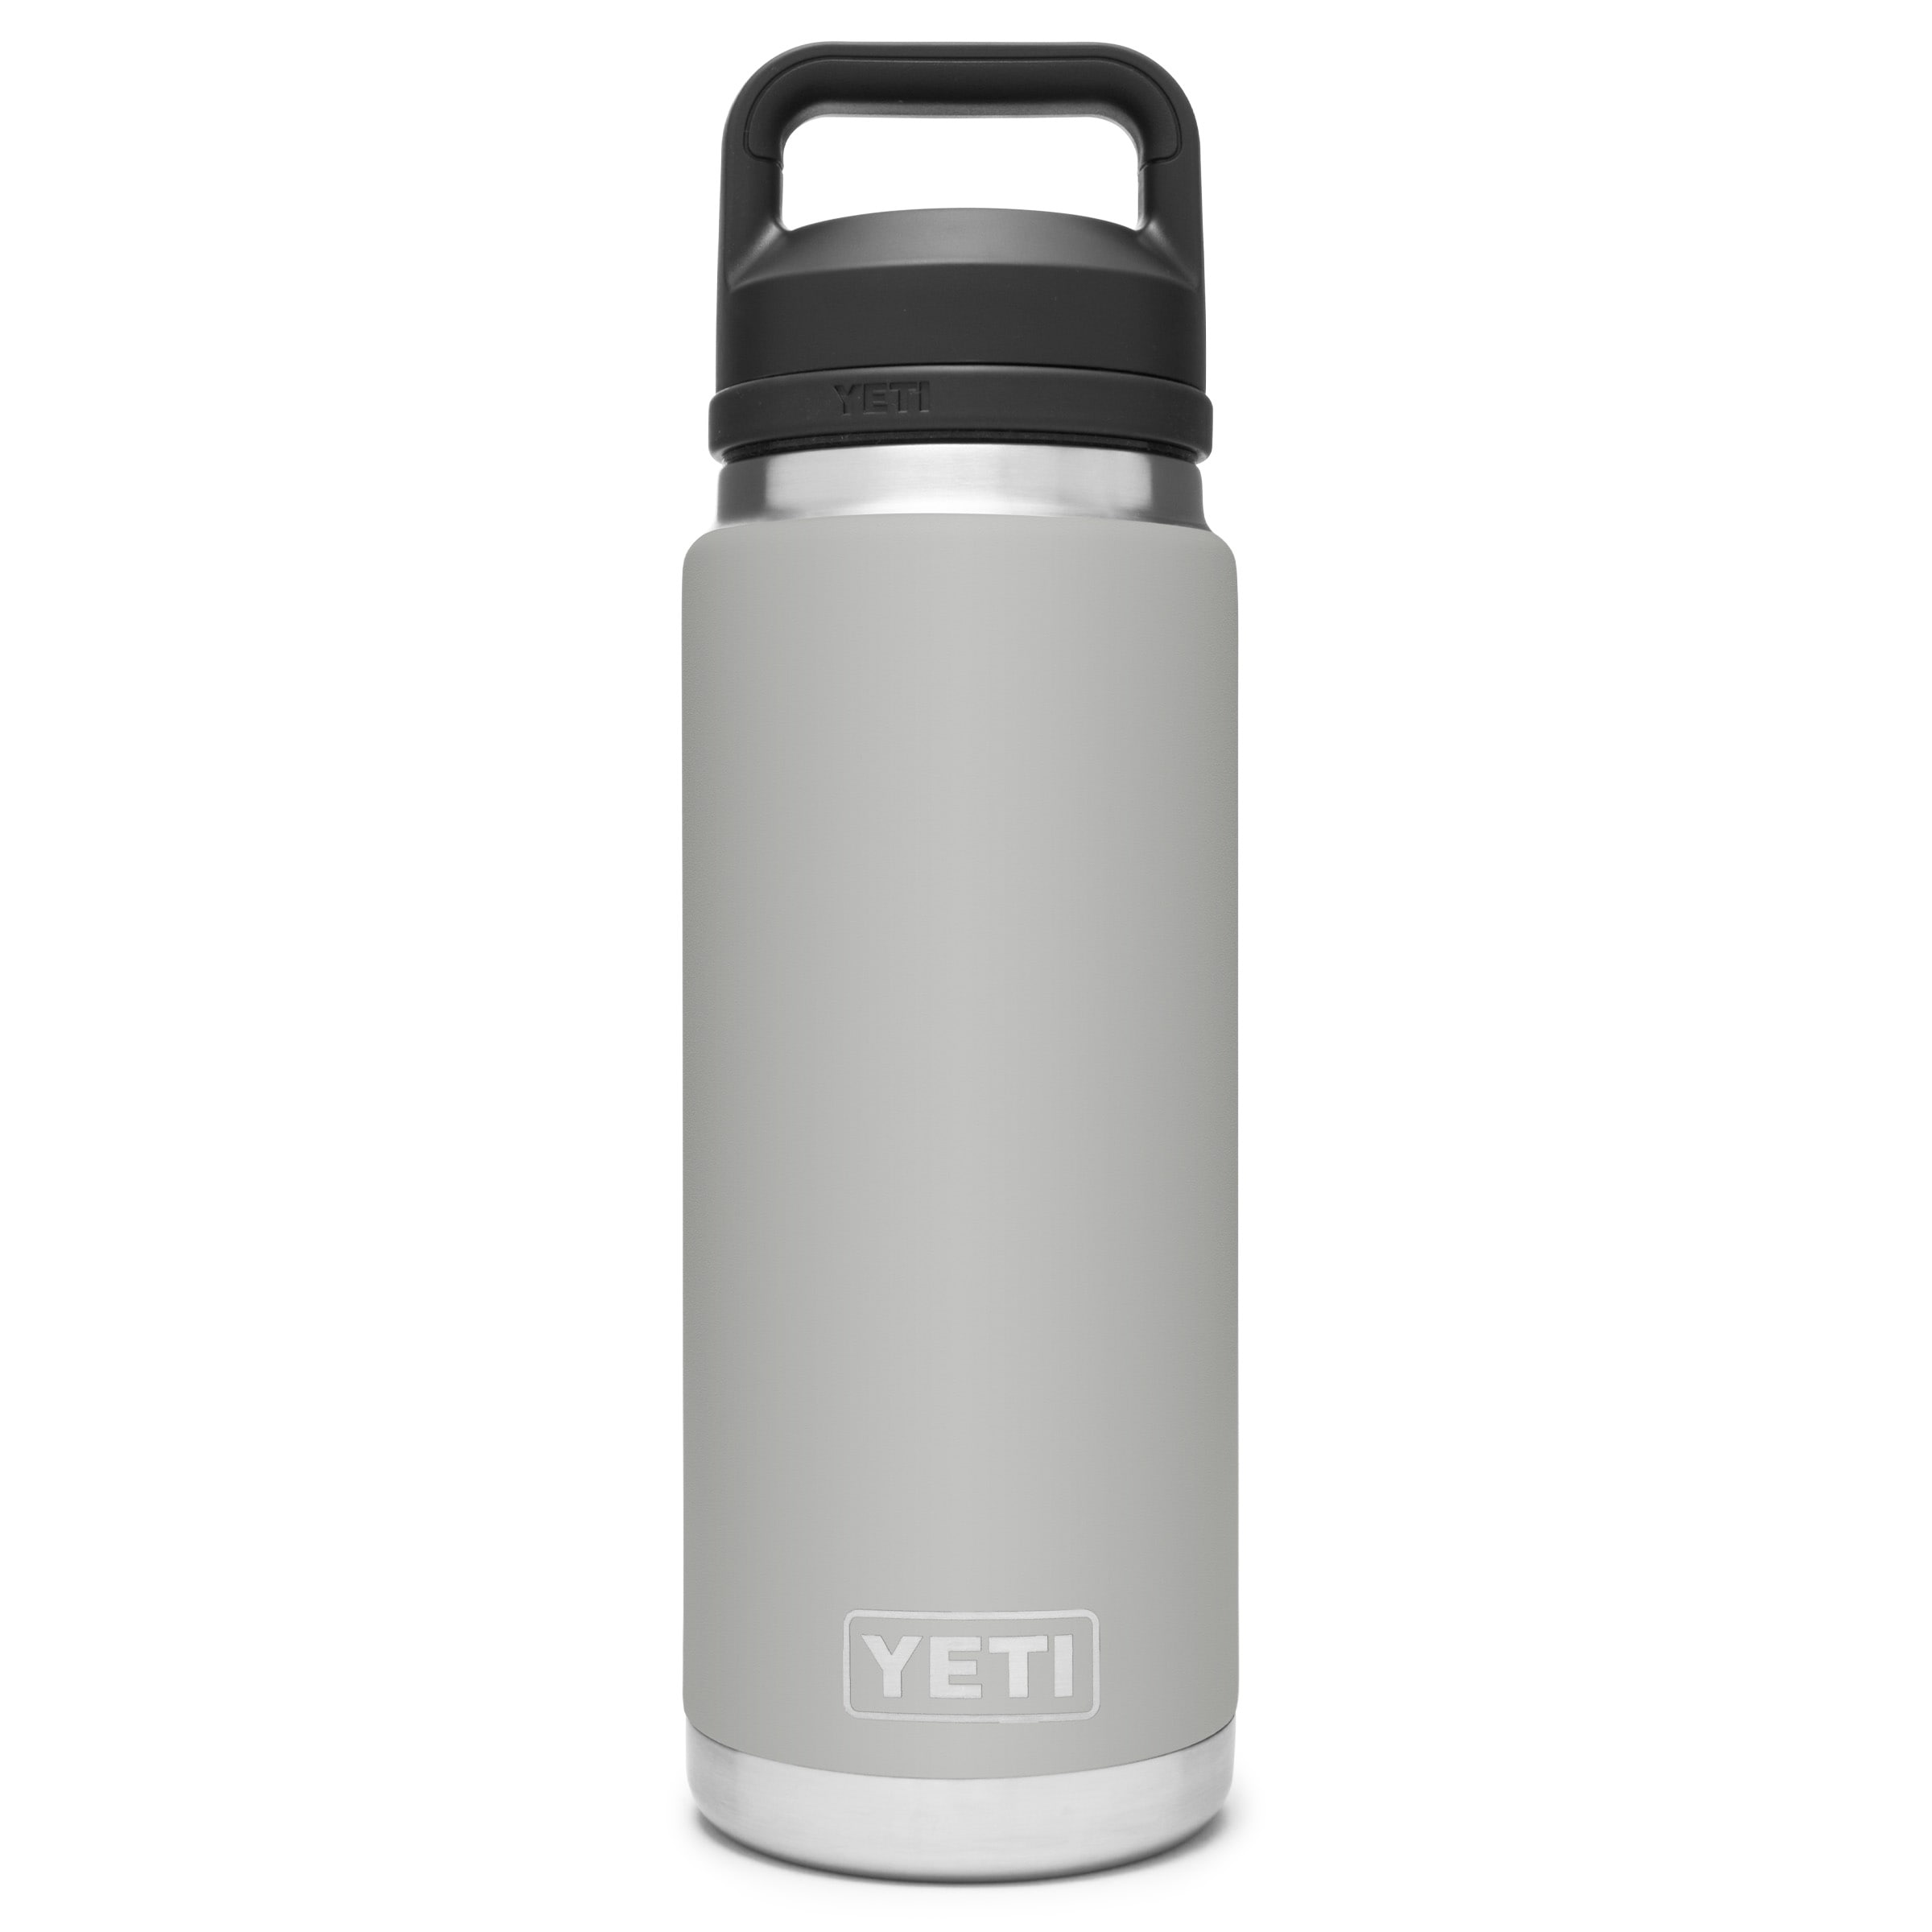 YETI Rambler 26-fl oz Stainless Steel Water Bottle in the Water